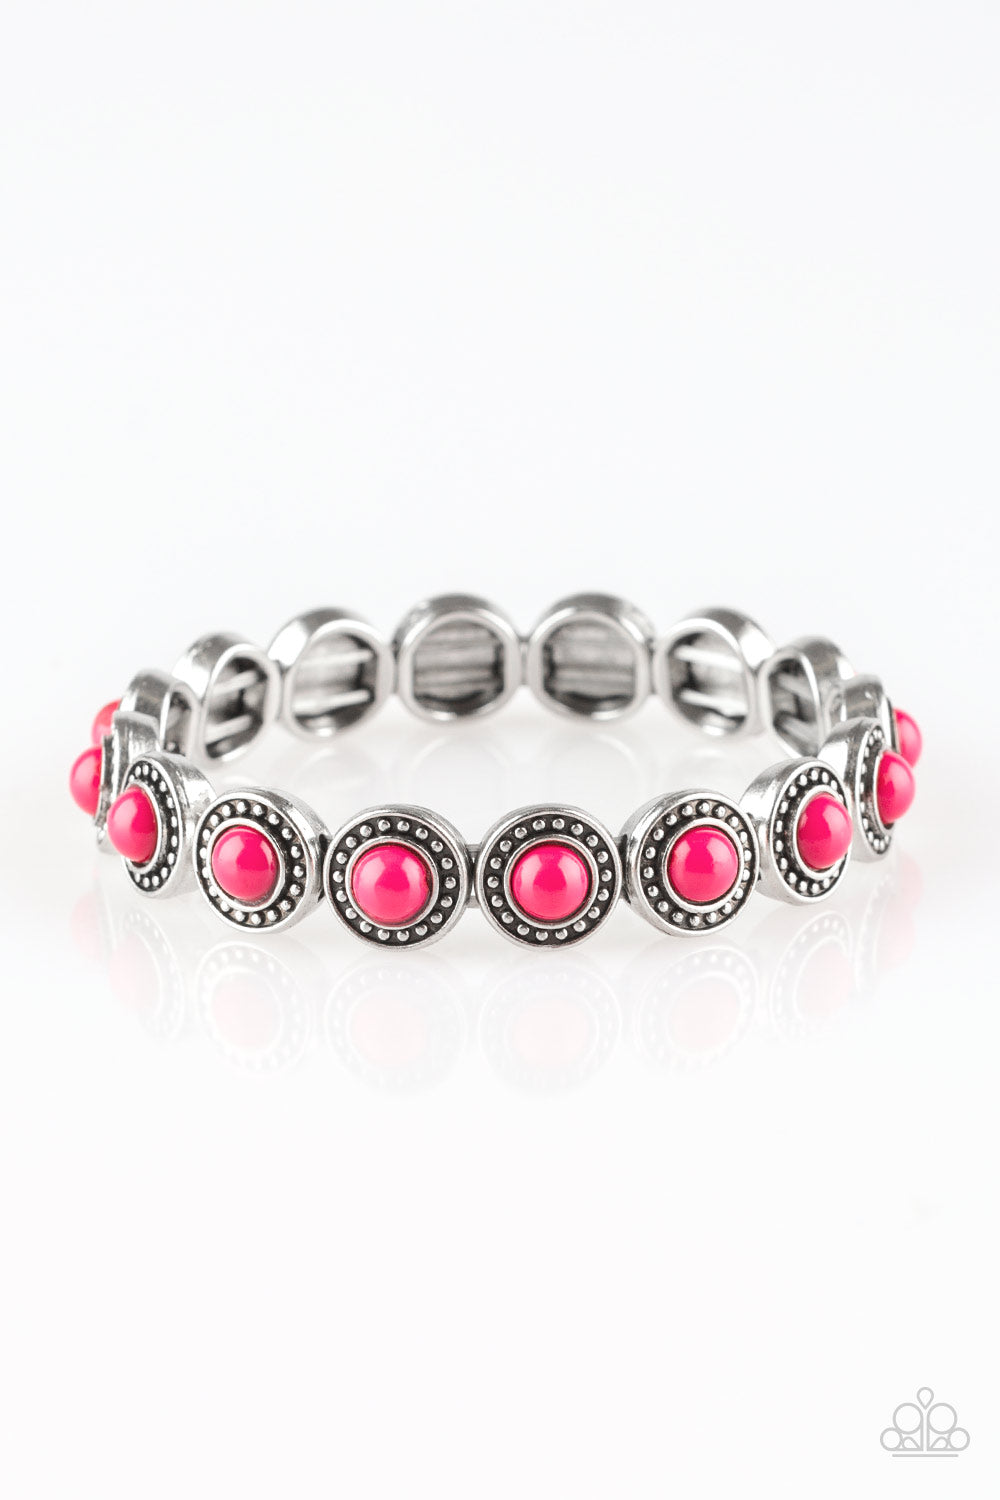 Globetrotter Goals Pink Paparazzi Bracelet Cashmere Pink Jewels - Cashmere Pink Jewels & Accessories, Cashmere Pink Jewels & Accessories - Paparazzi